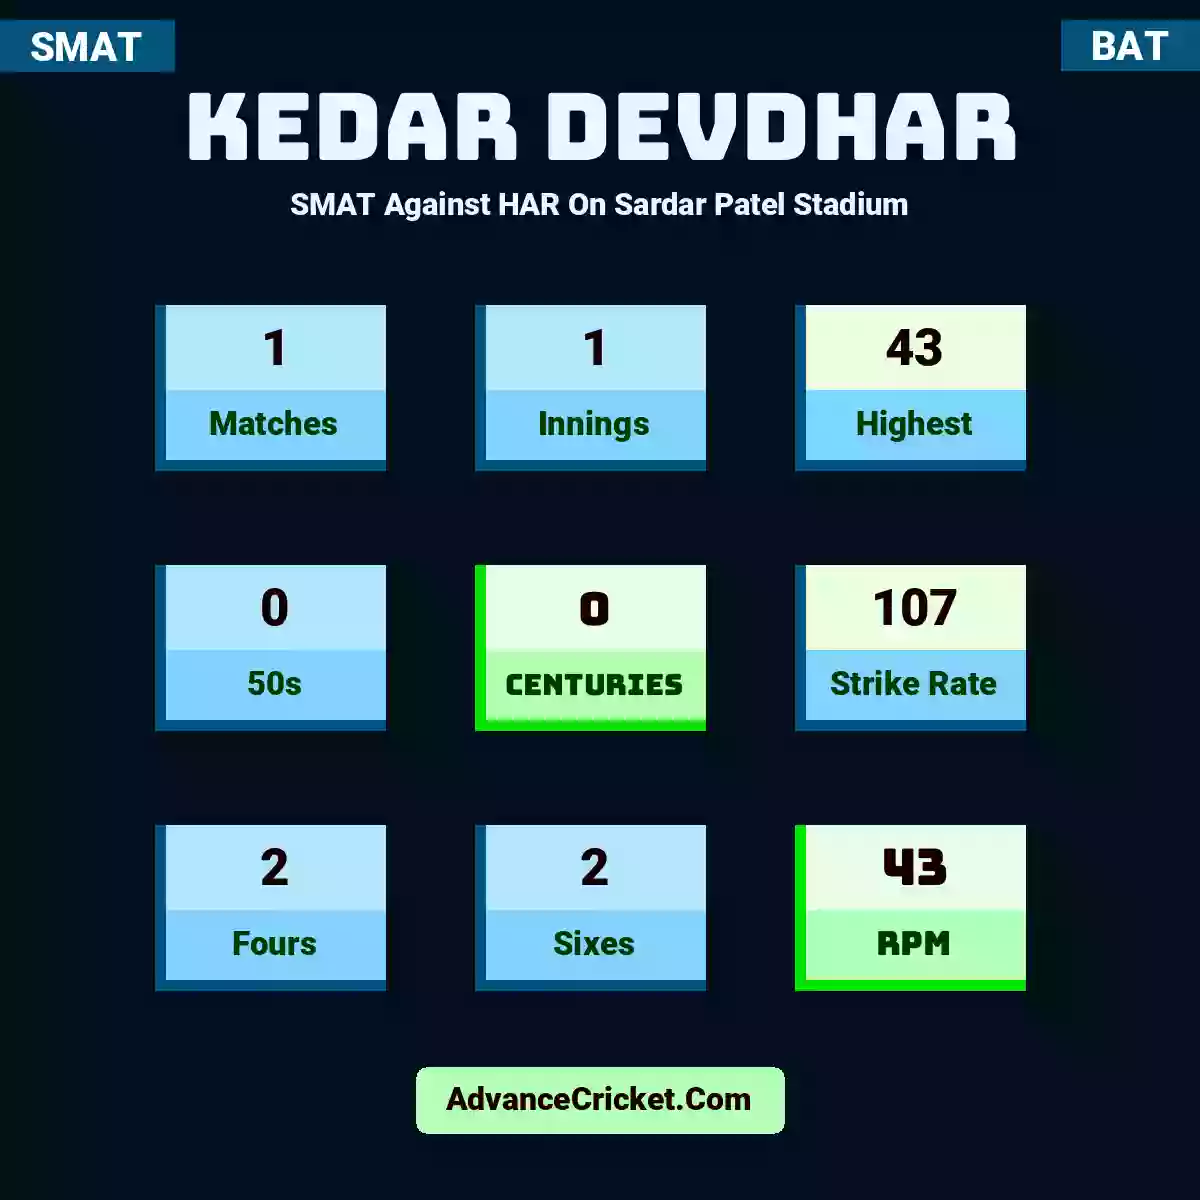 Kedar Devdhar SMAT  Against HAR On Sardar Patel Stadium, Kedar Devdhar played 1 matches, scored 43 runs as highest, 0 half-centuries, and 0 centuries, with a strike rate of 107. K.Devdhar hit 2 fours and 2 sixes, with an RPM of 43.